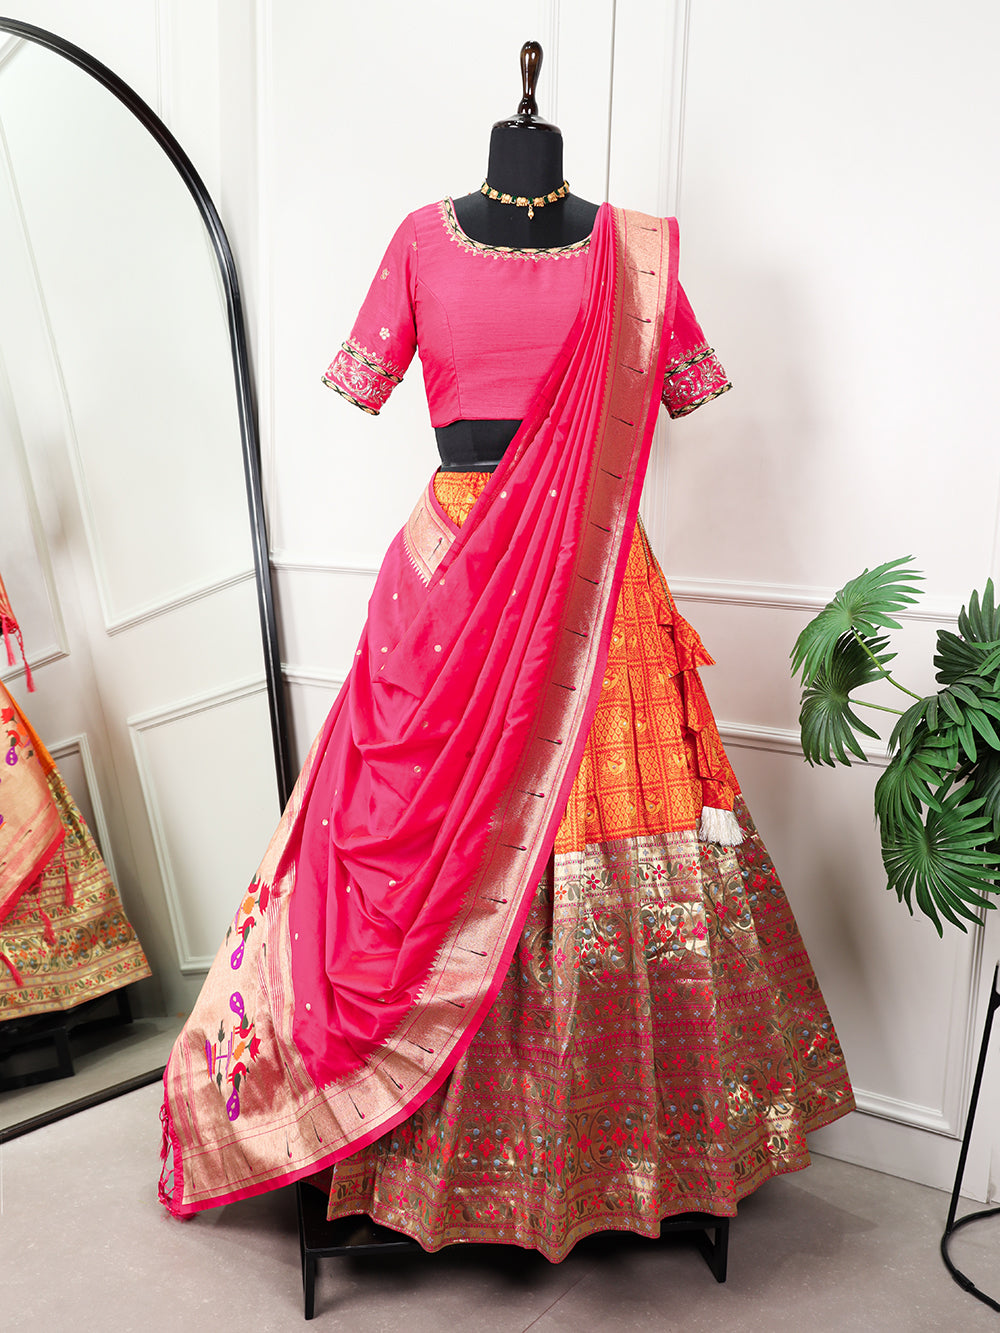 Lehenga Style Saree Choli - Buy Lehenga Style Saree Choli online in India